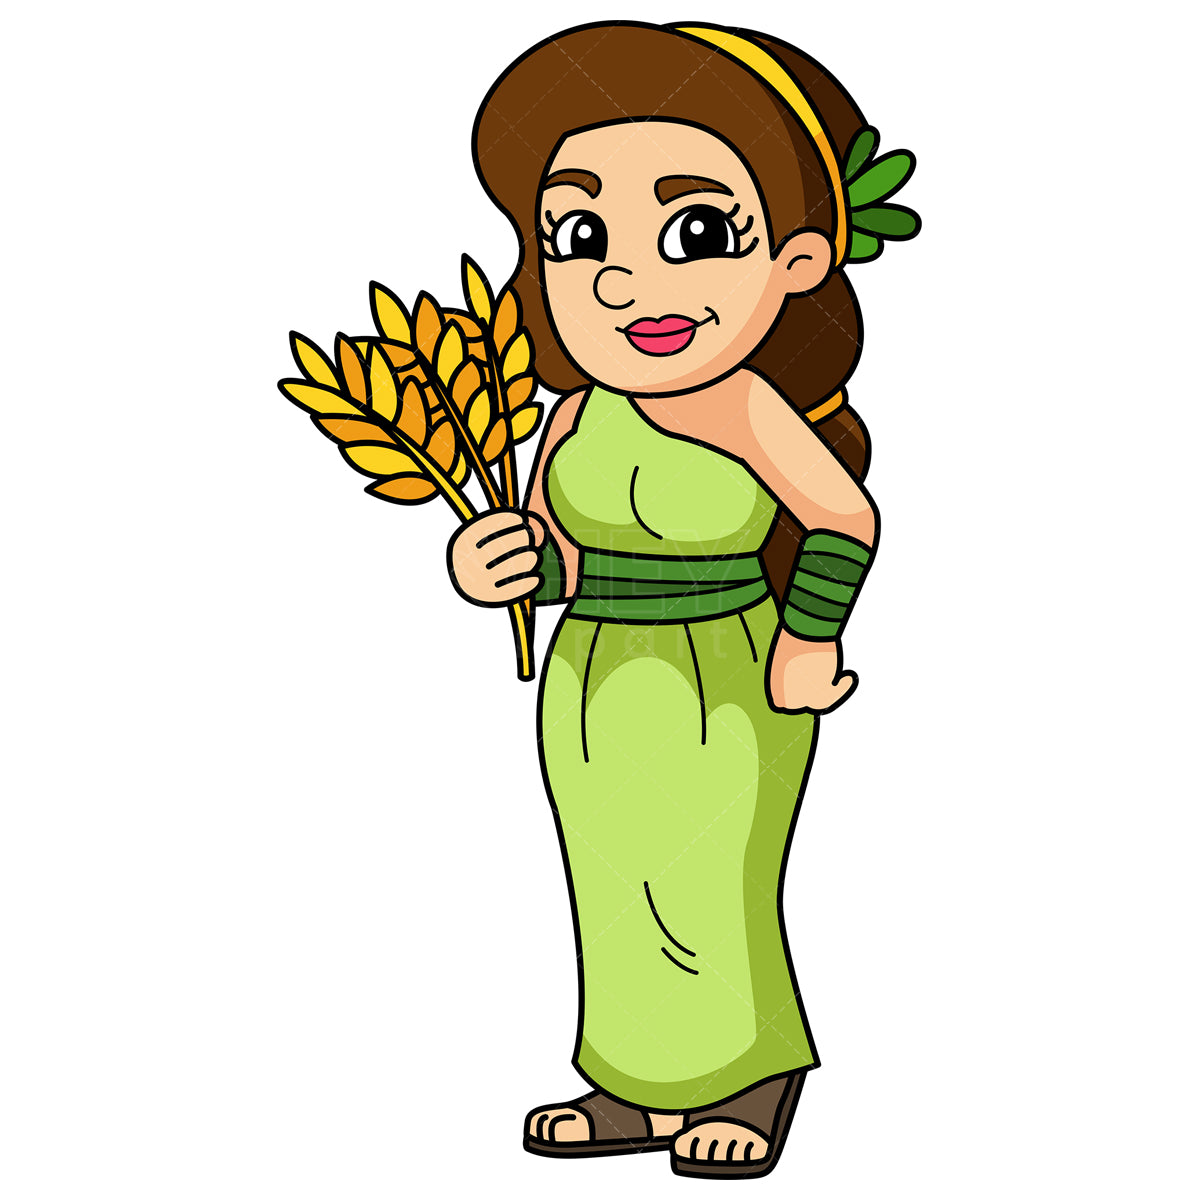 Royalty-free stock vector illustration of a demeter goddess.